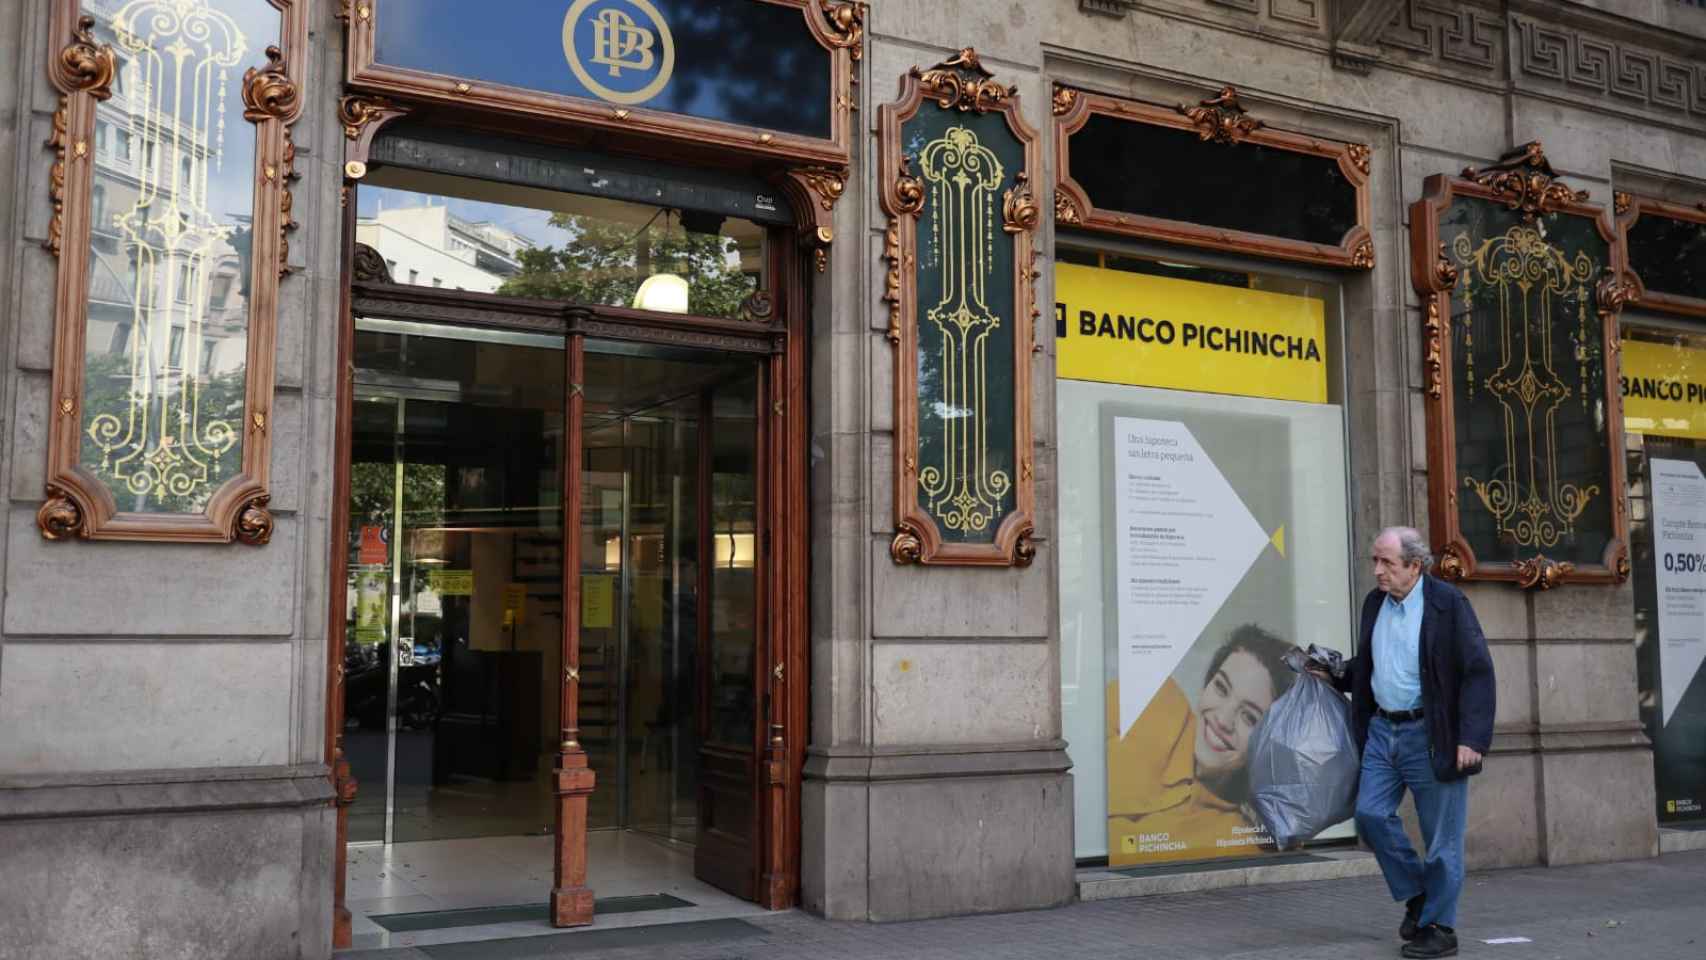 Oficina Pichincha en la Gran Via de Barcelona / H.F.